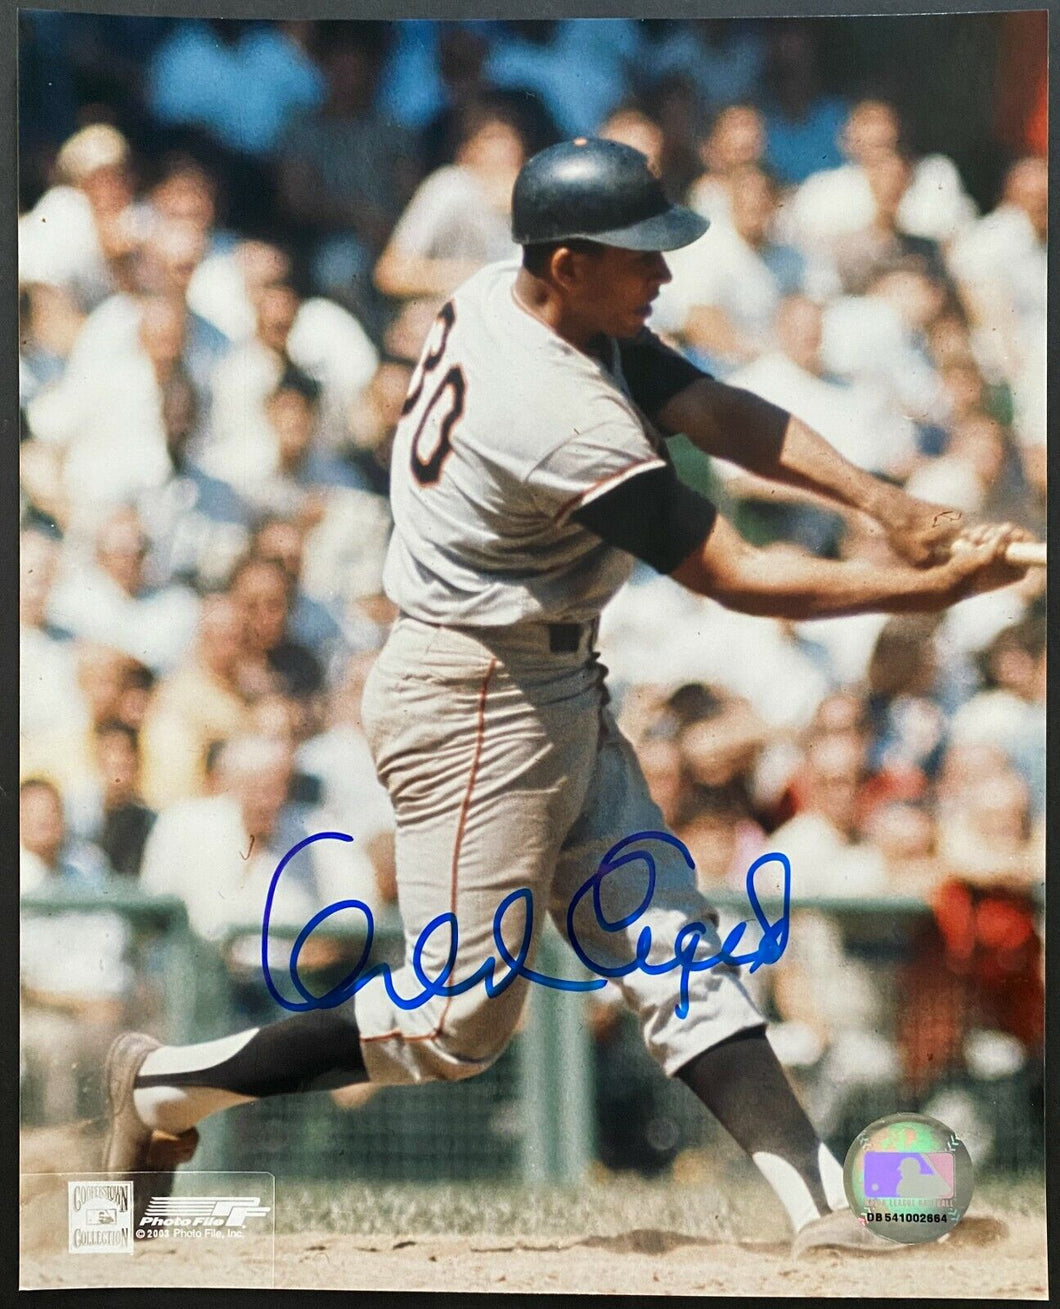 Signed MLB Baseball San Francisco Giants Orlando Cepeda Autographed Photo HOFer